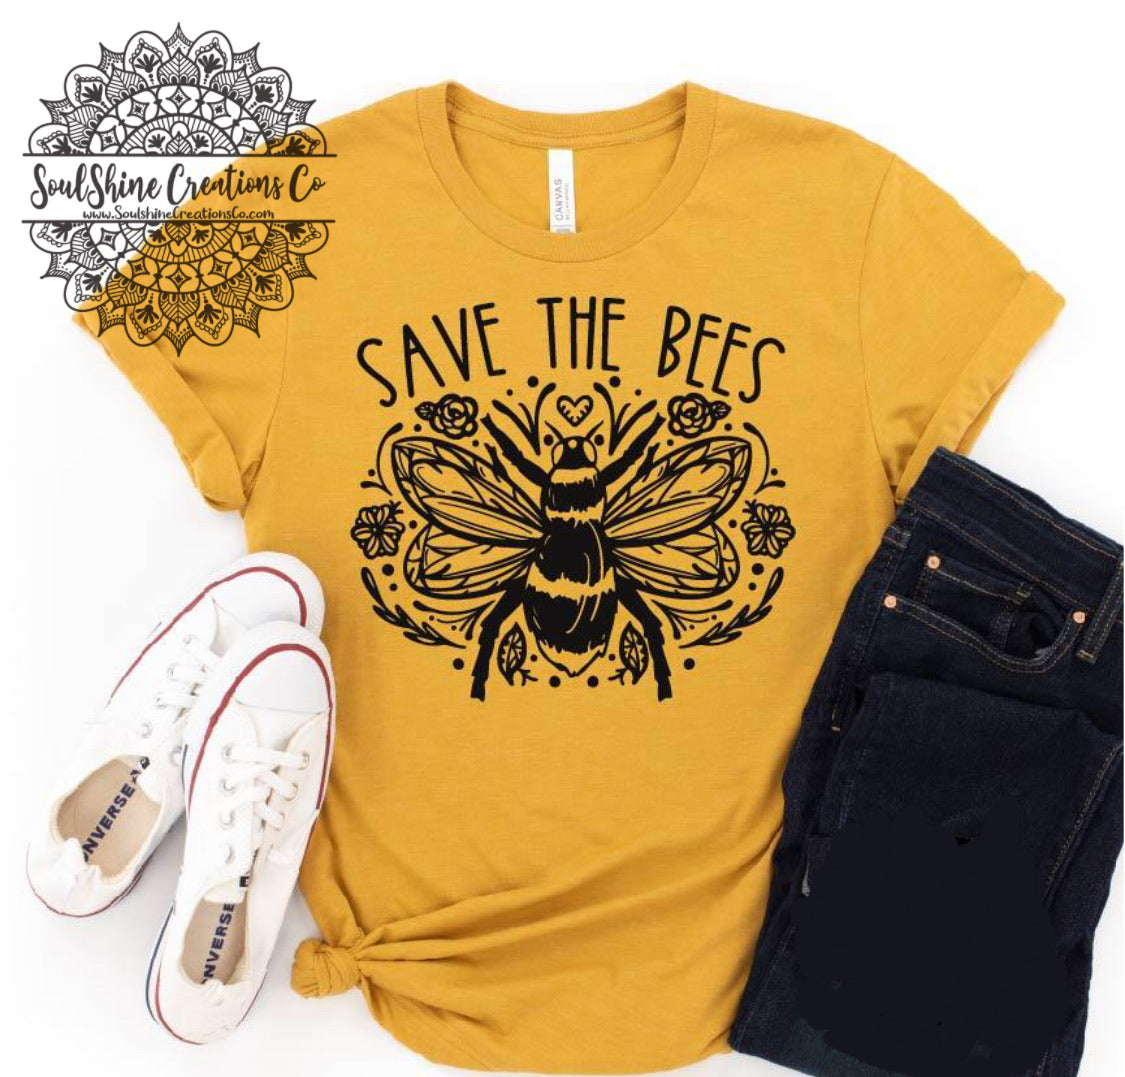 Save the Bees Shirt